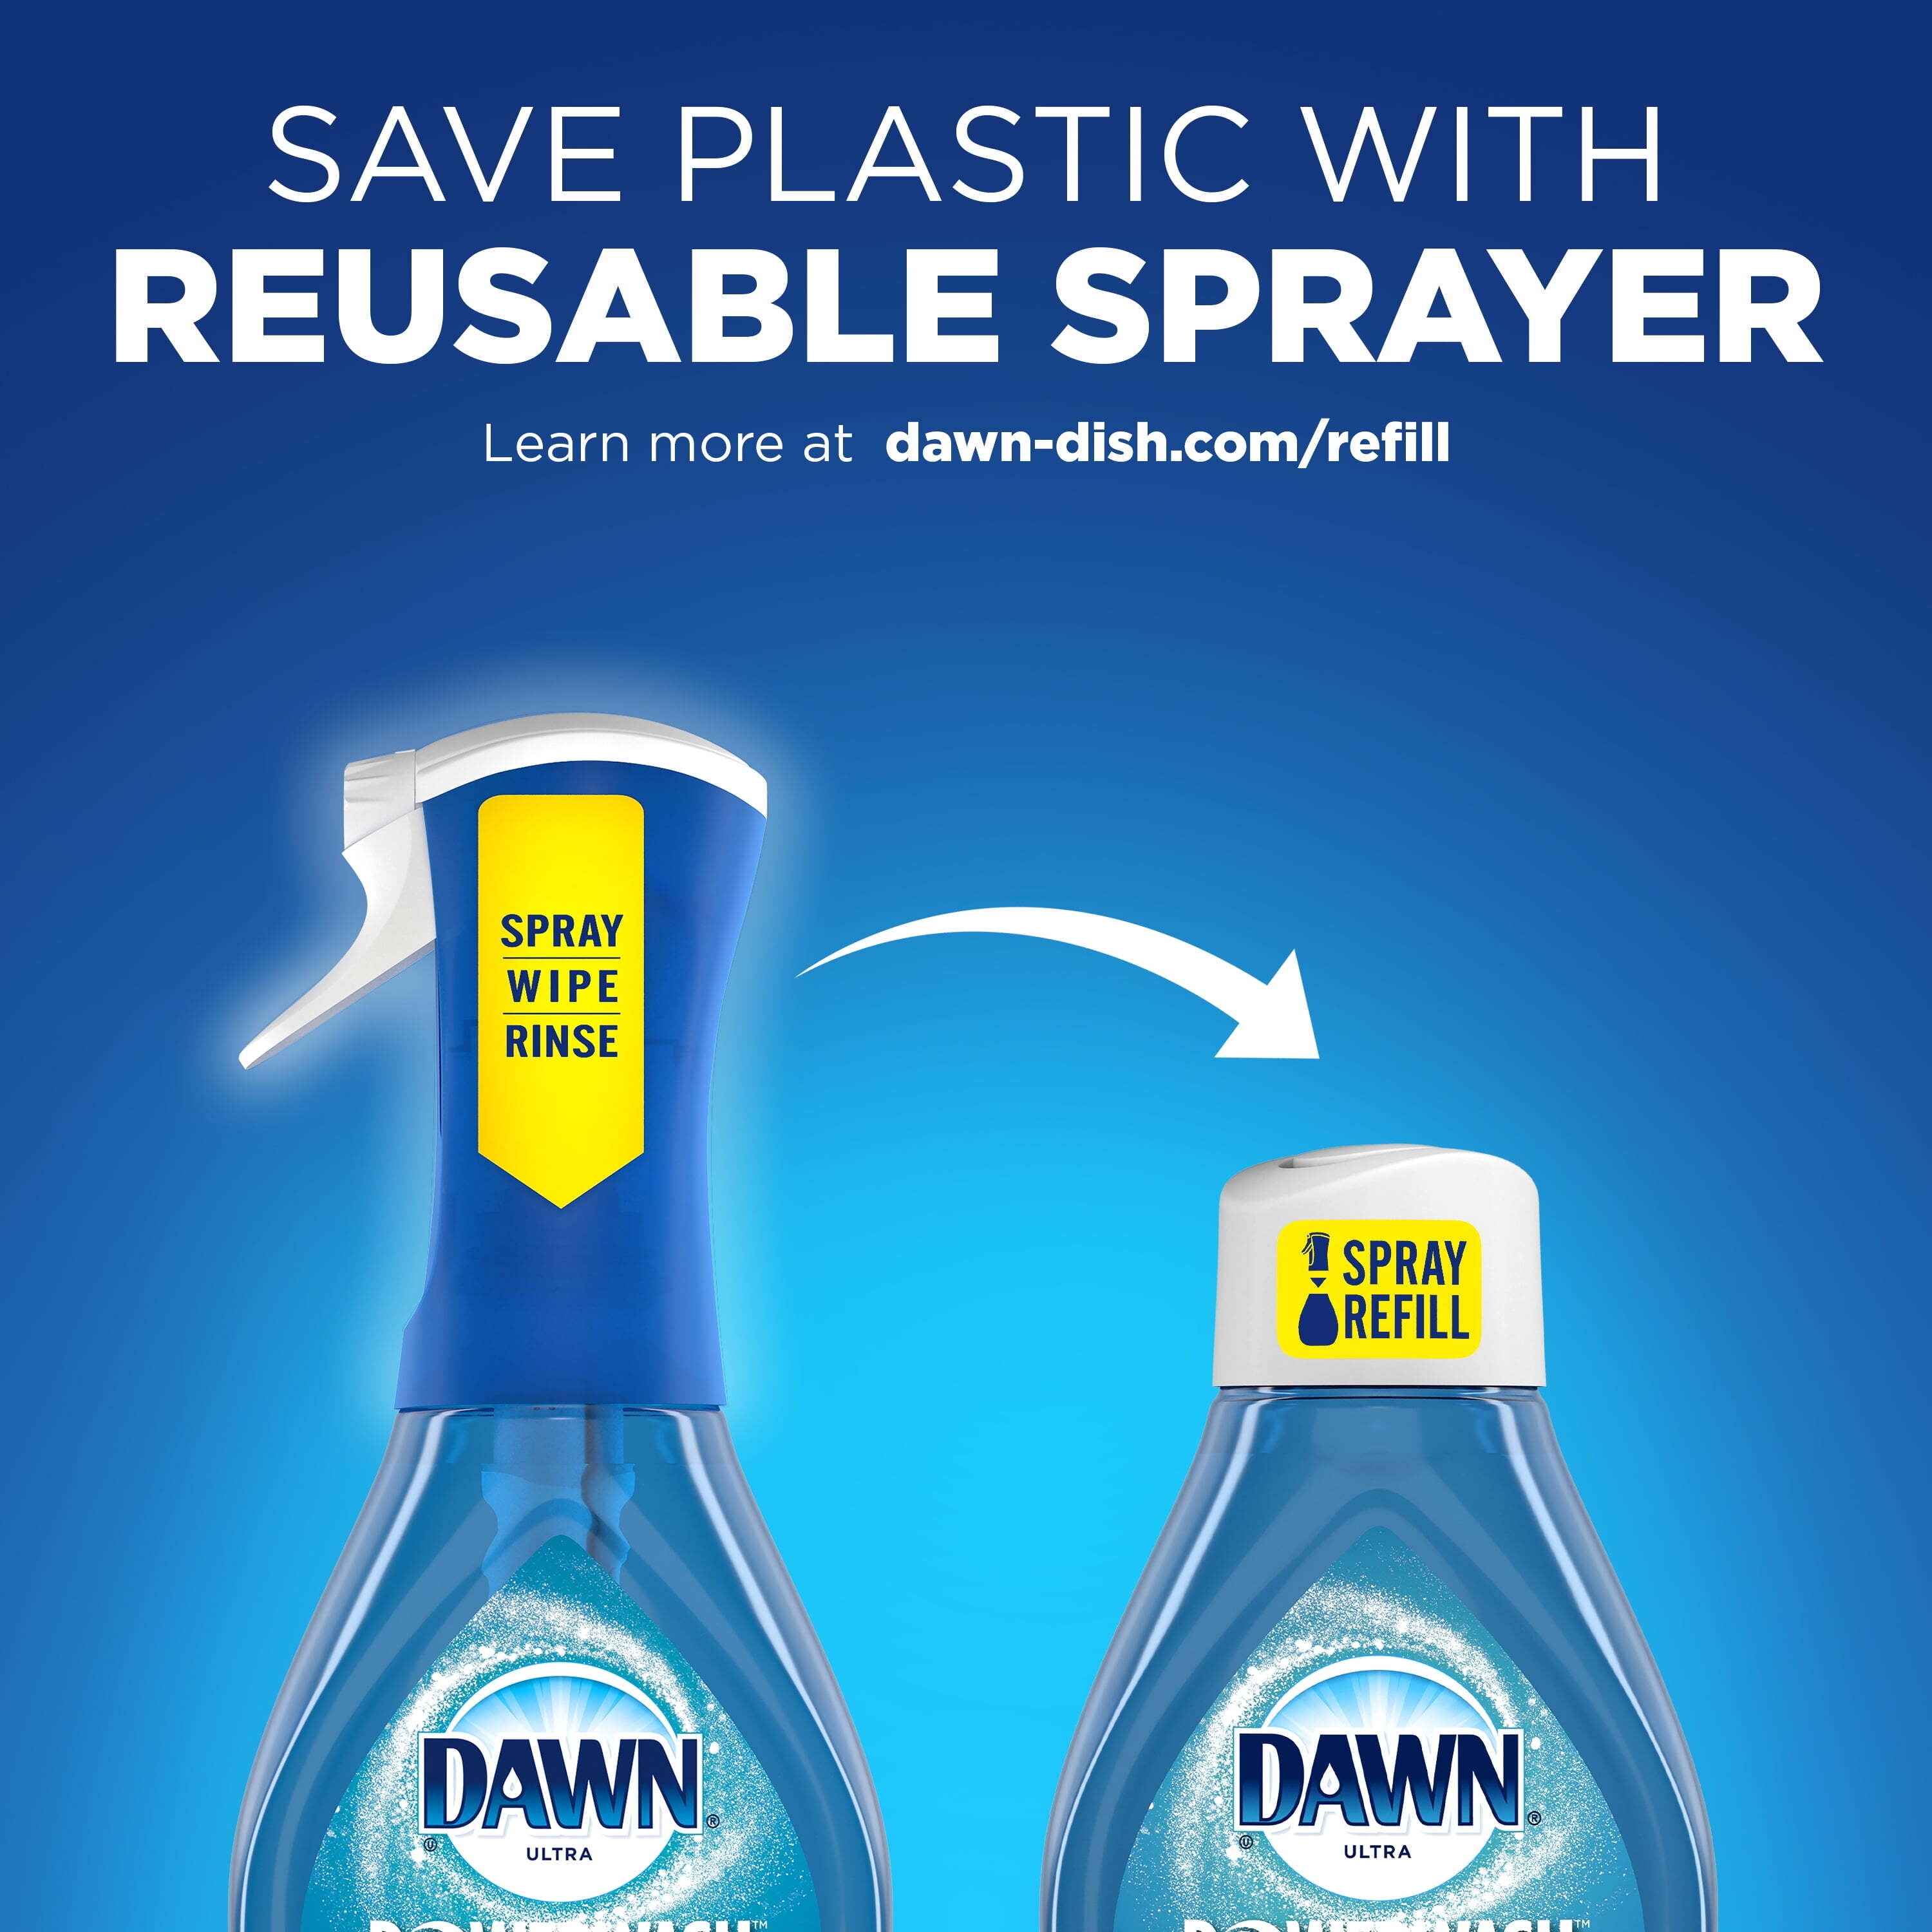 Dawn Powerwash Platinum Dish Spray Soap Refill, Lemon Scent, 16 oz.